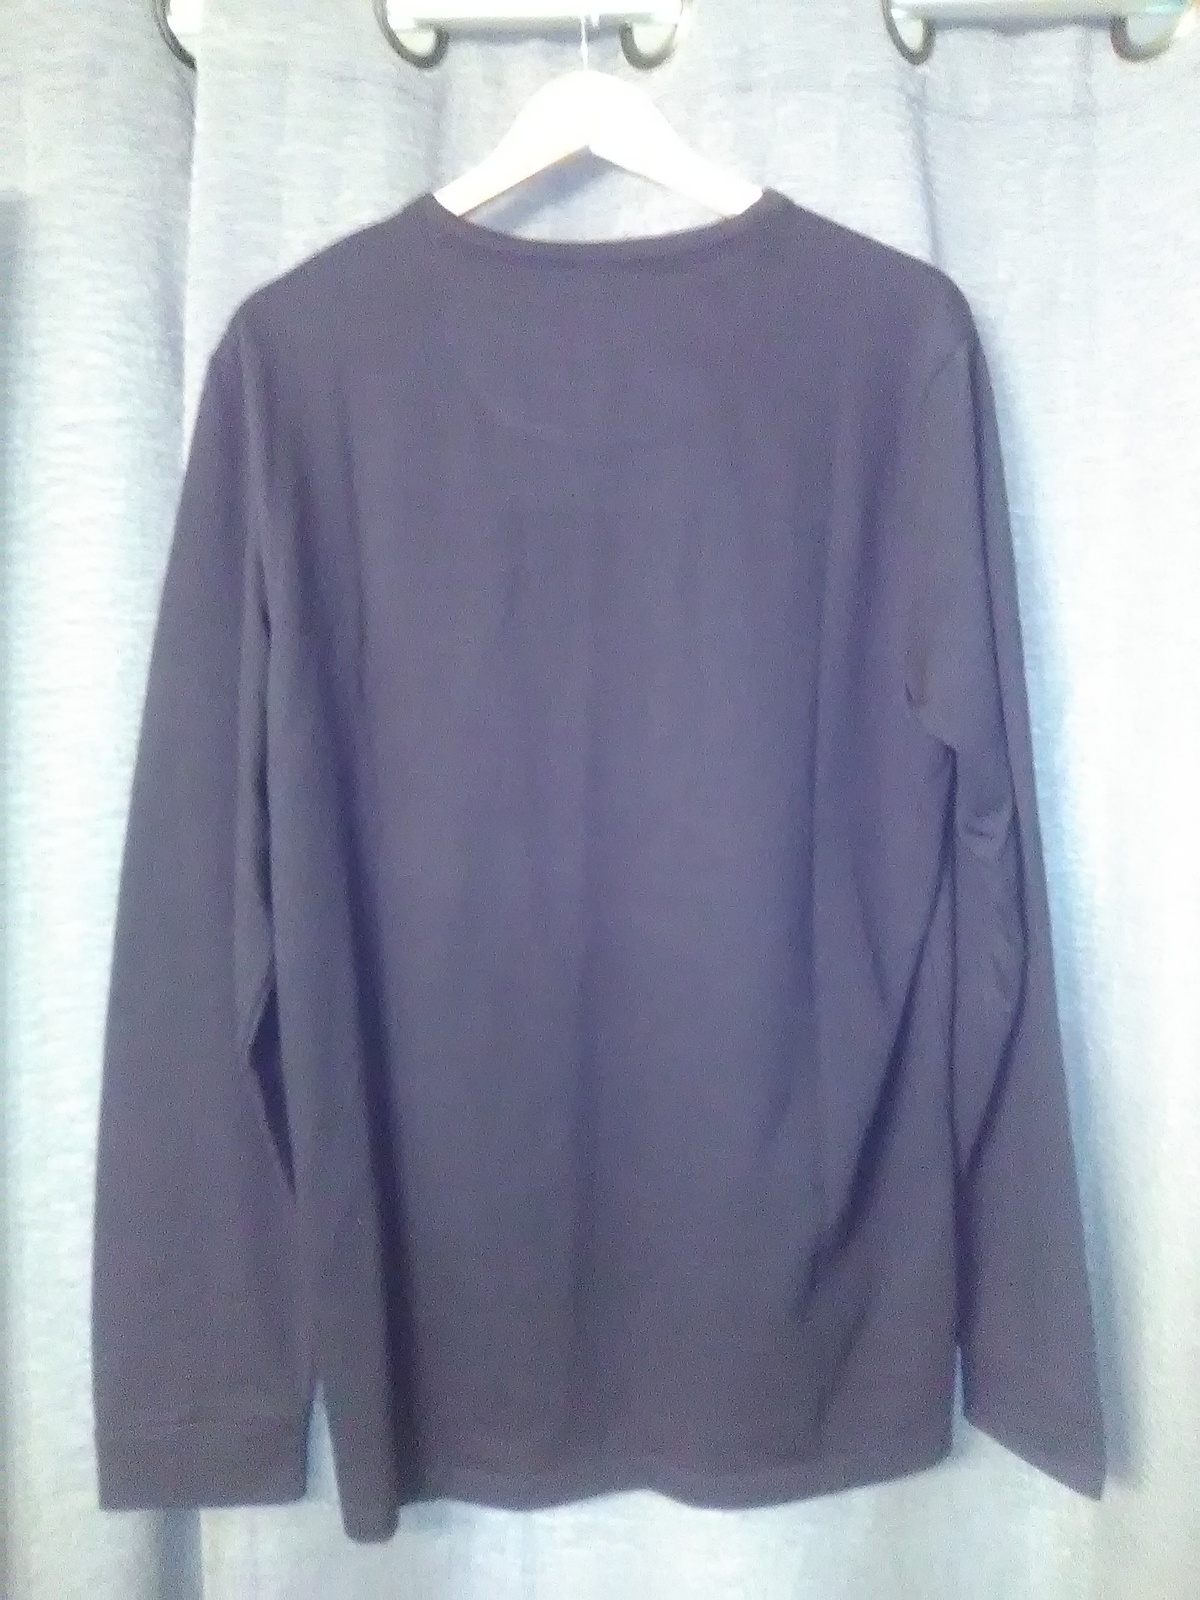 Marc Anthony Slim-Fit Long sleeve shirt (Size: Large) - Casual Shirts